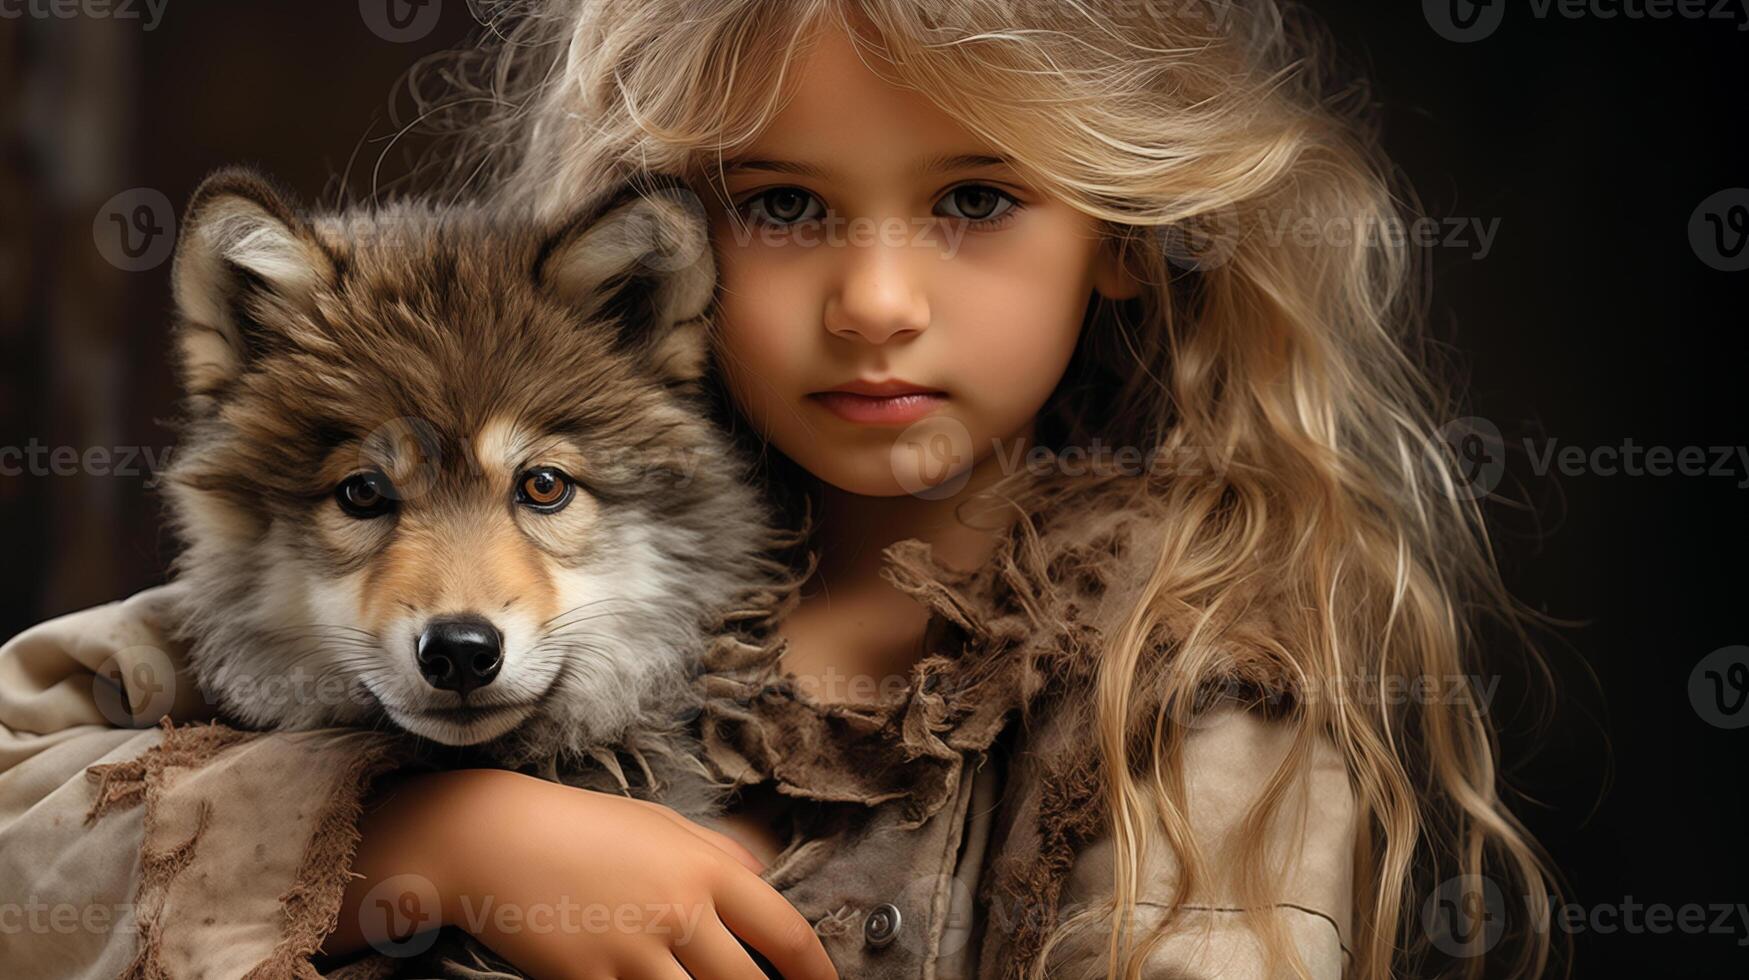 AI generated Serene Child Embracing Furry Friend in Soft Glow photo